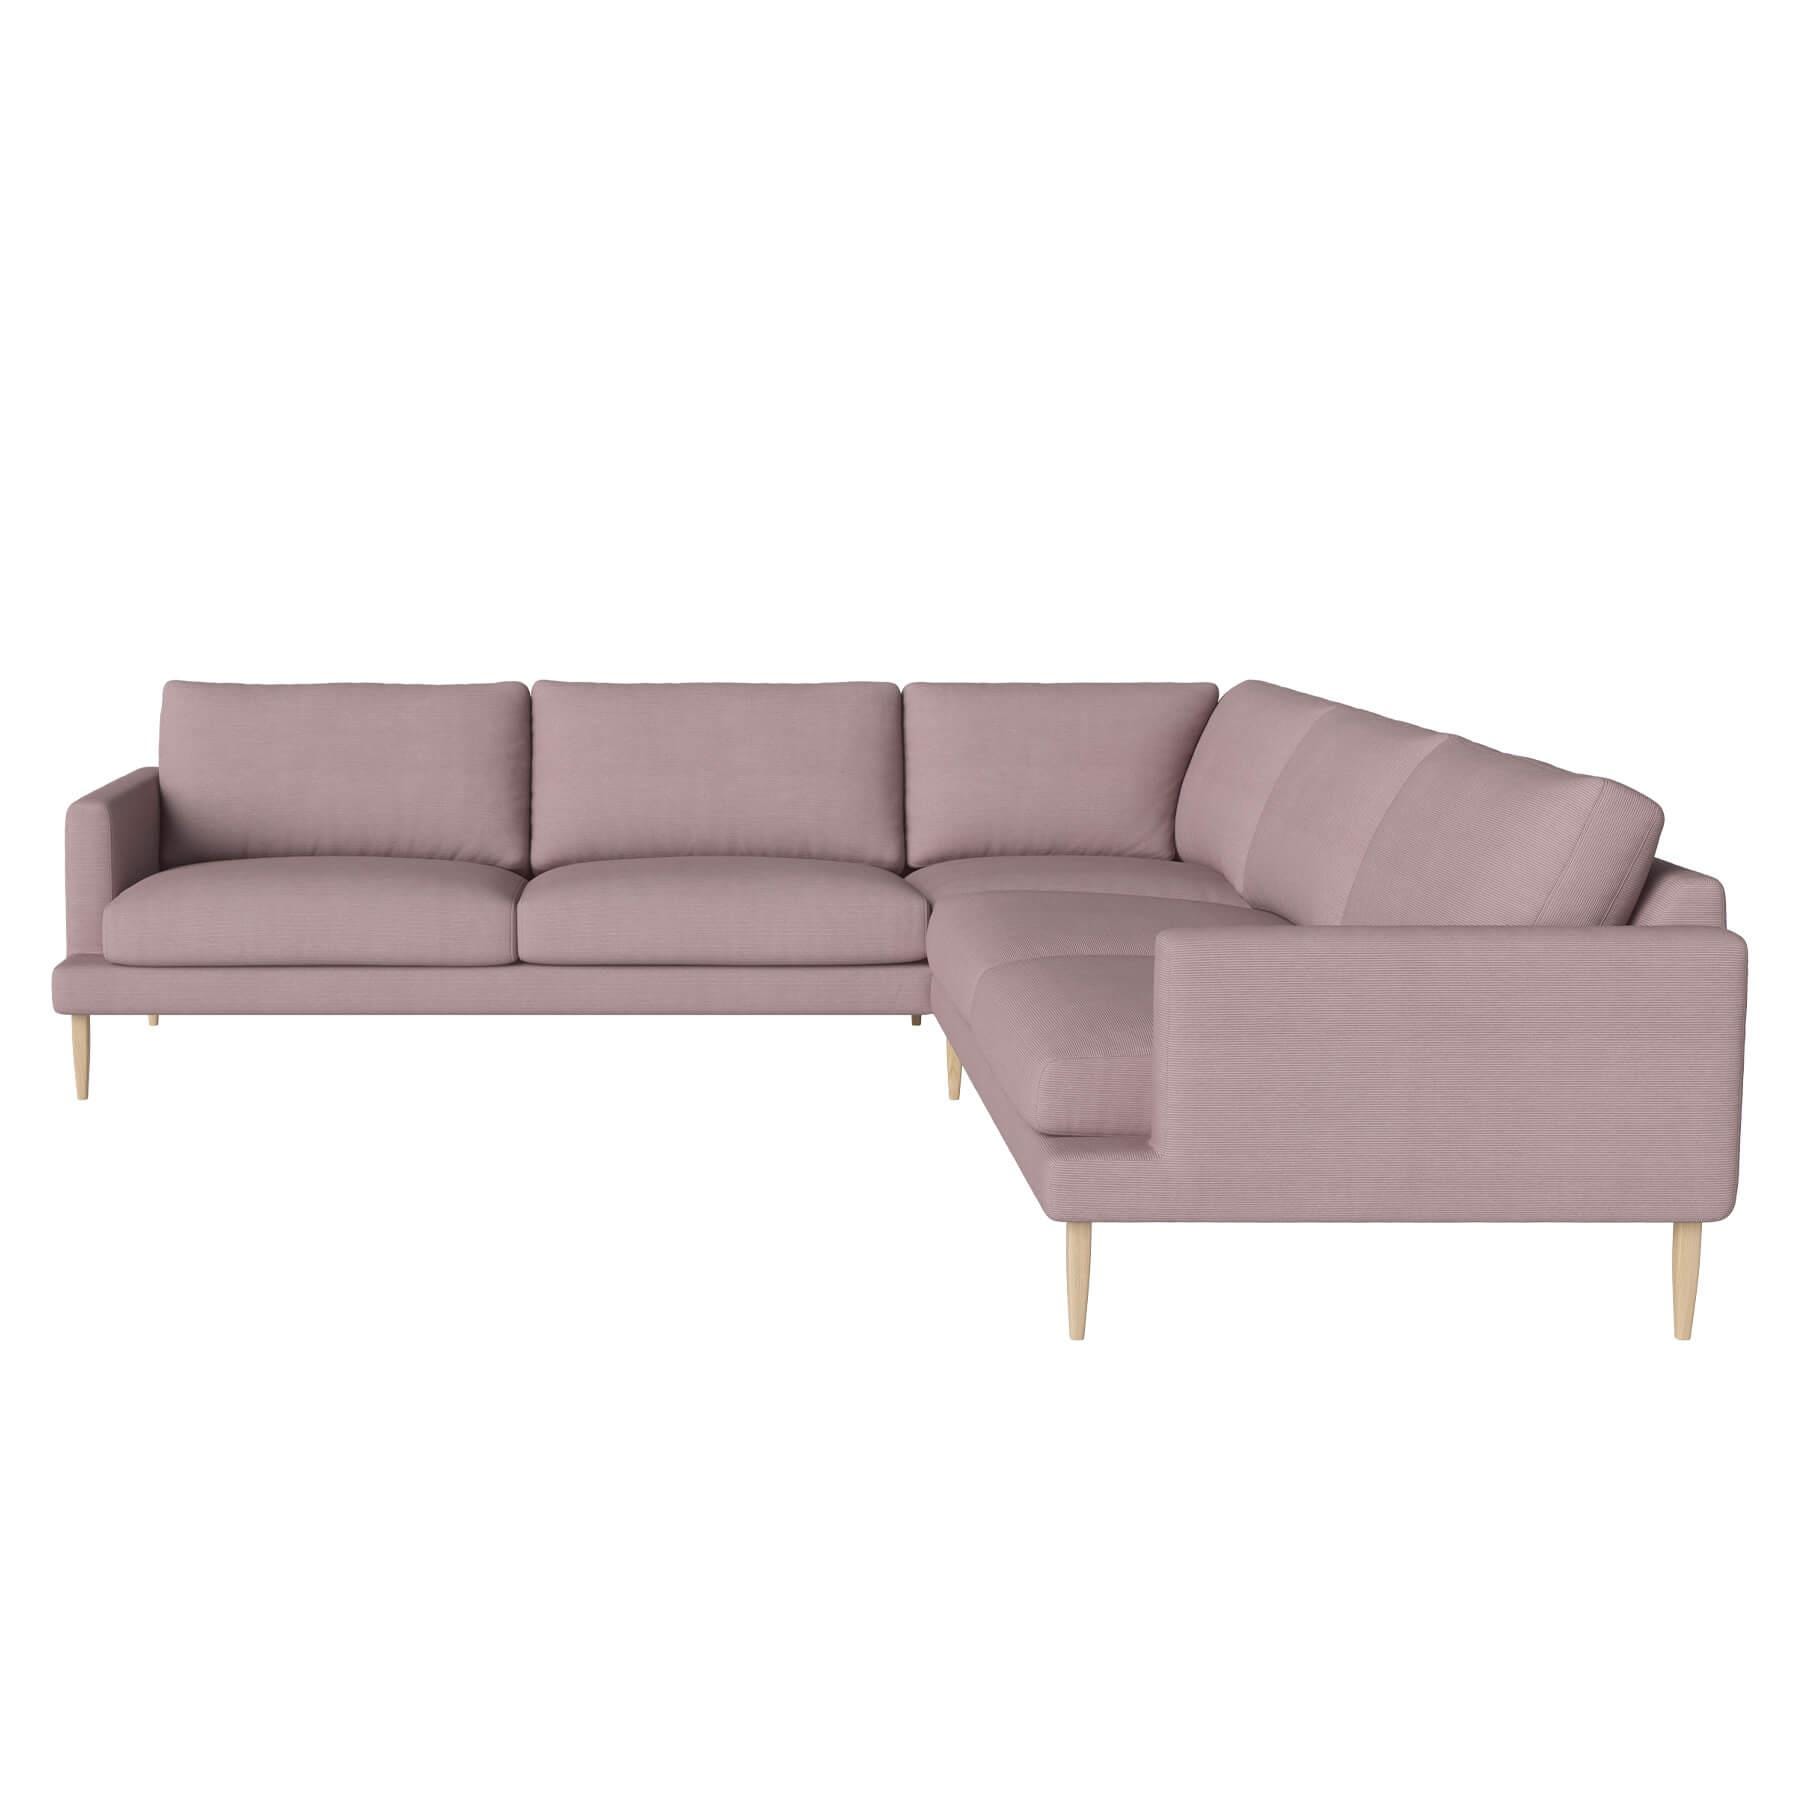 Bolia Veneda Sofa 6 Seater Sofa Corner Sofa White Oiled Oak Linea Rosa Pink Designer Furniture From Holloways Of Ludlow